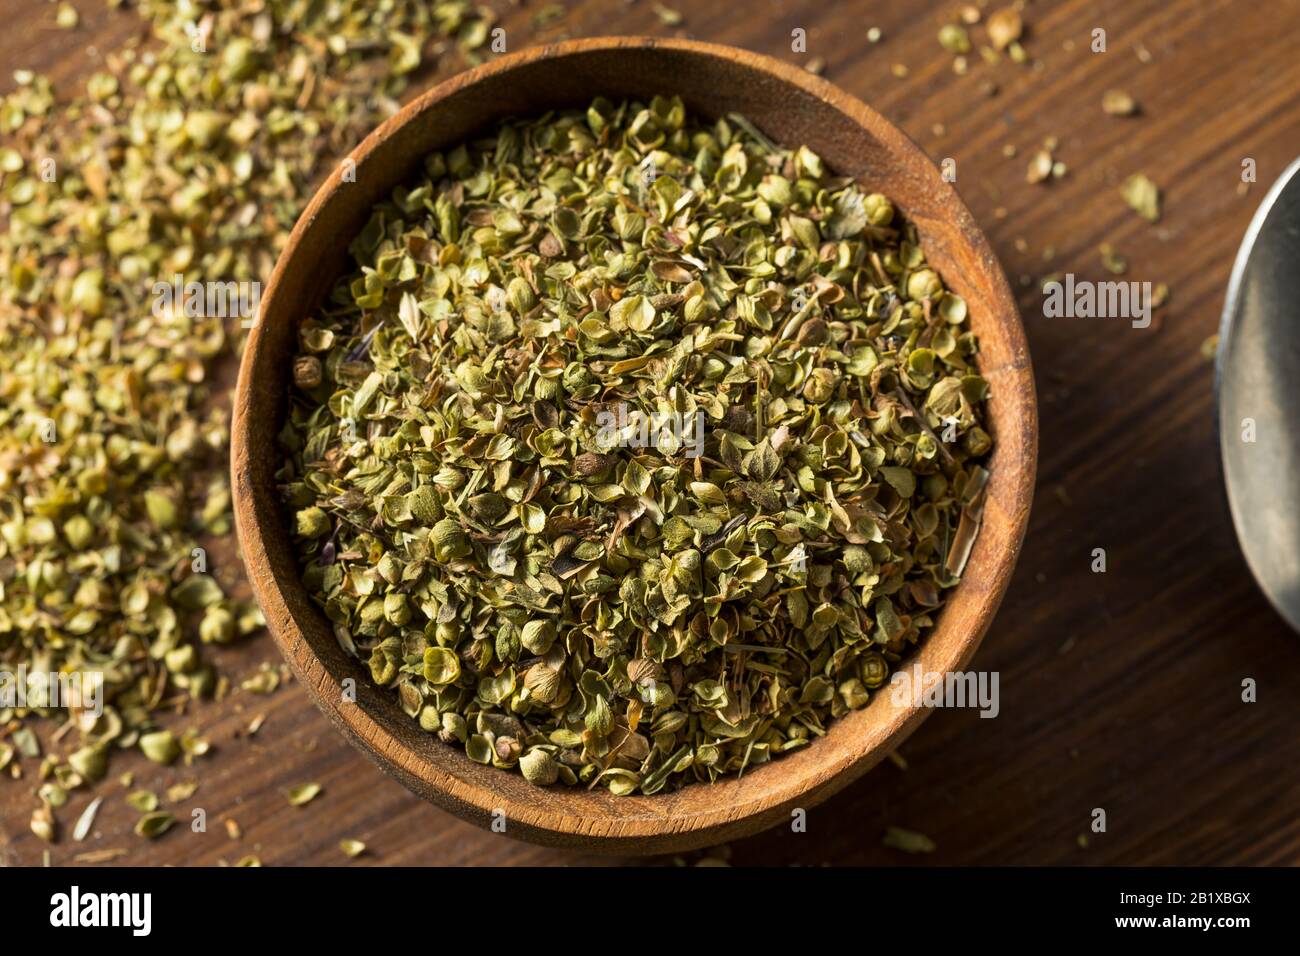 Raw Dried Green Greek Oregano Spice in a Bowl Stock Photo